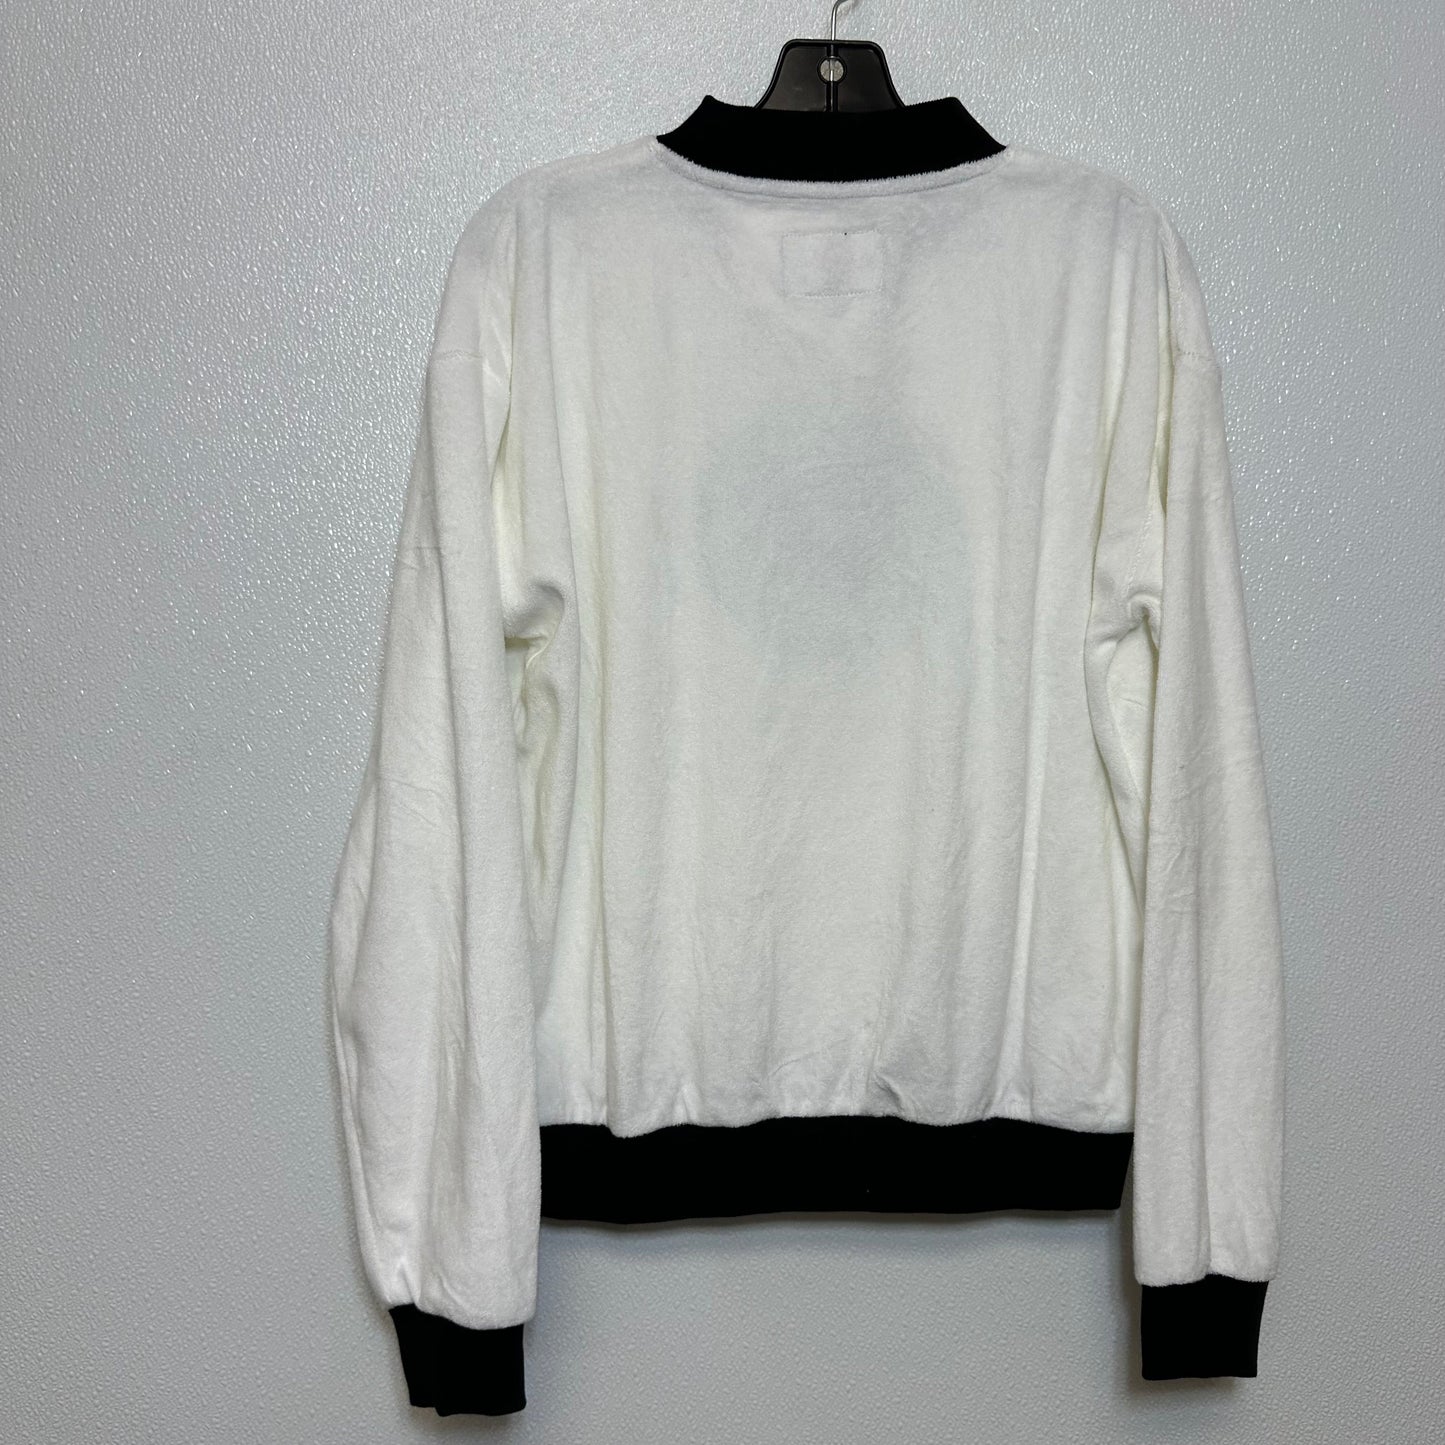 Sweatshirt Crewneck By ELLANDEMM CHA CHA Size: S/M